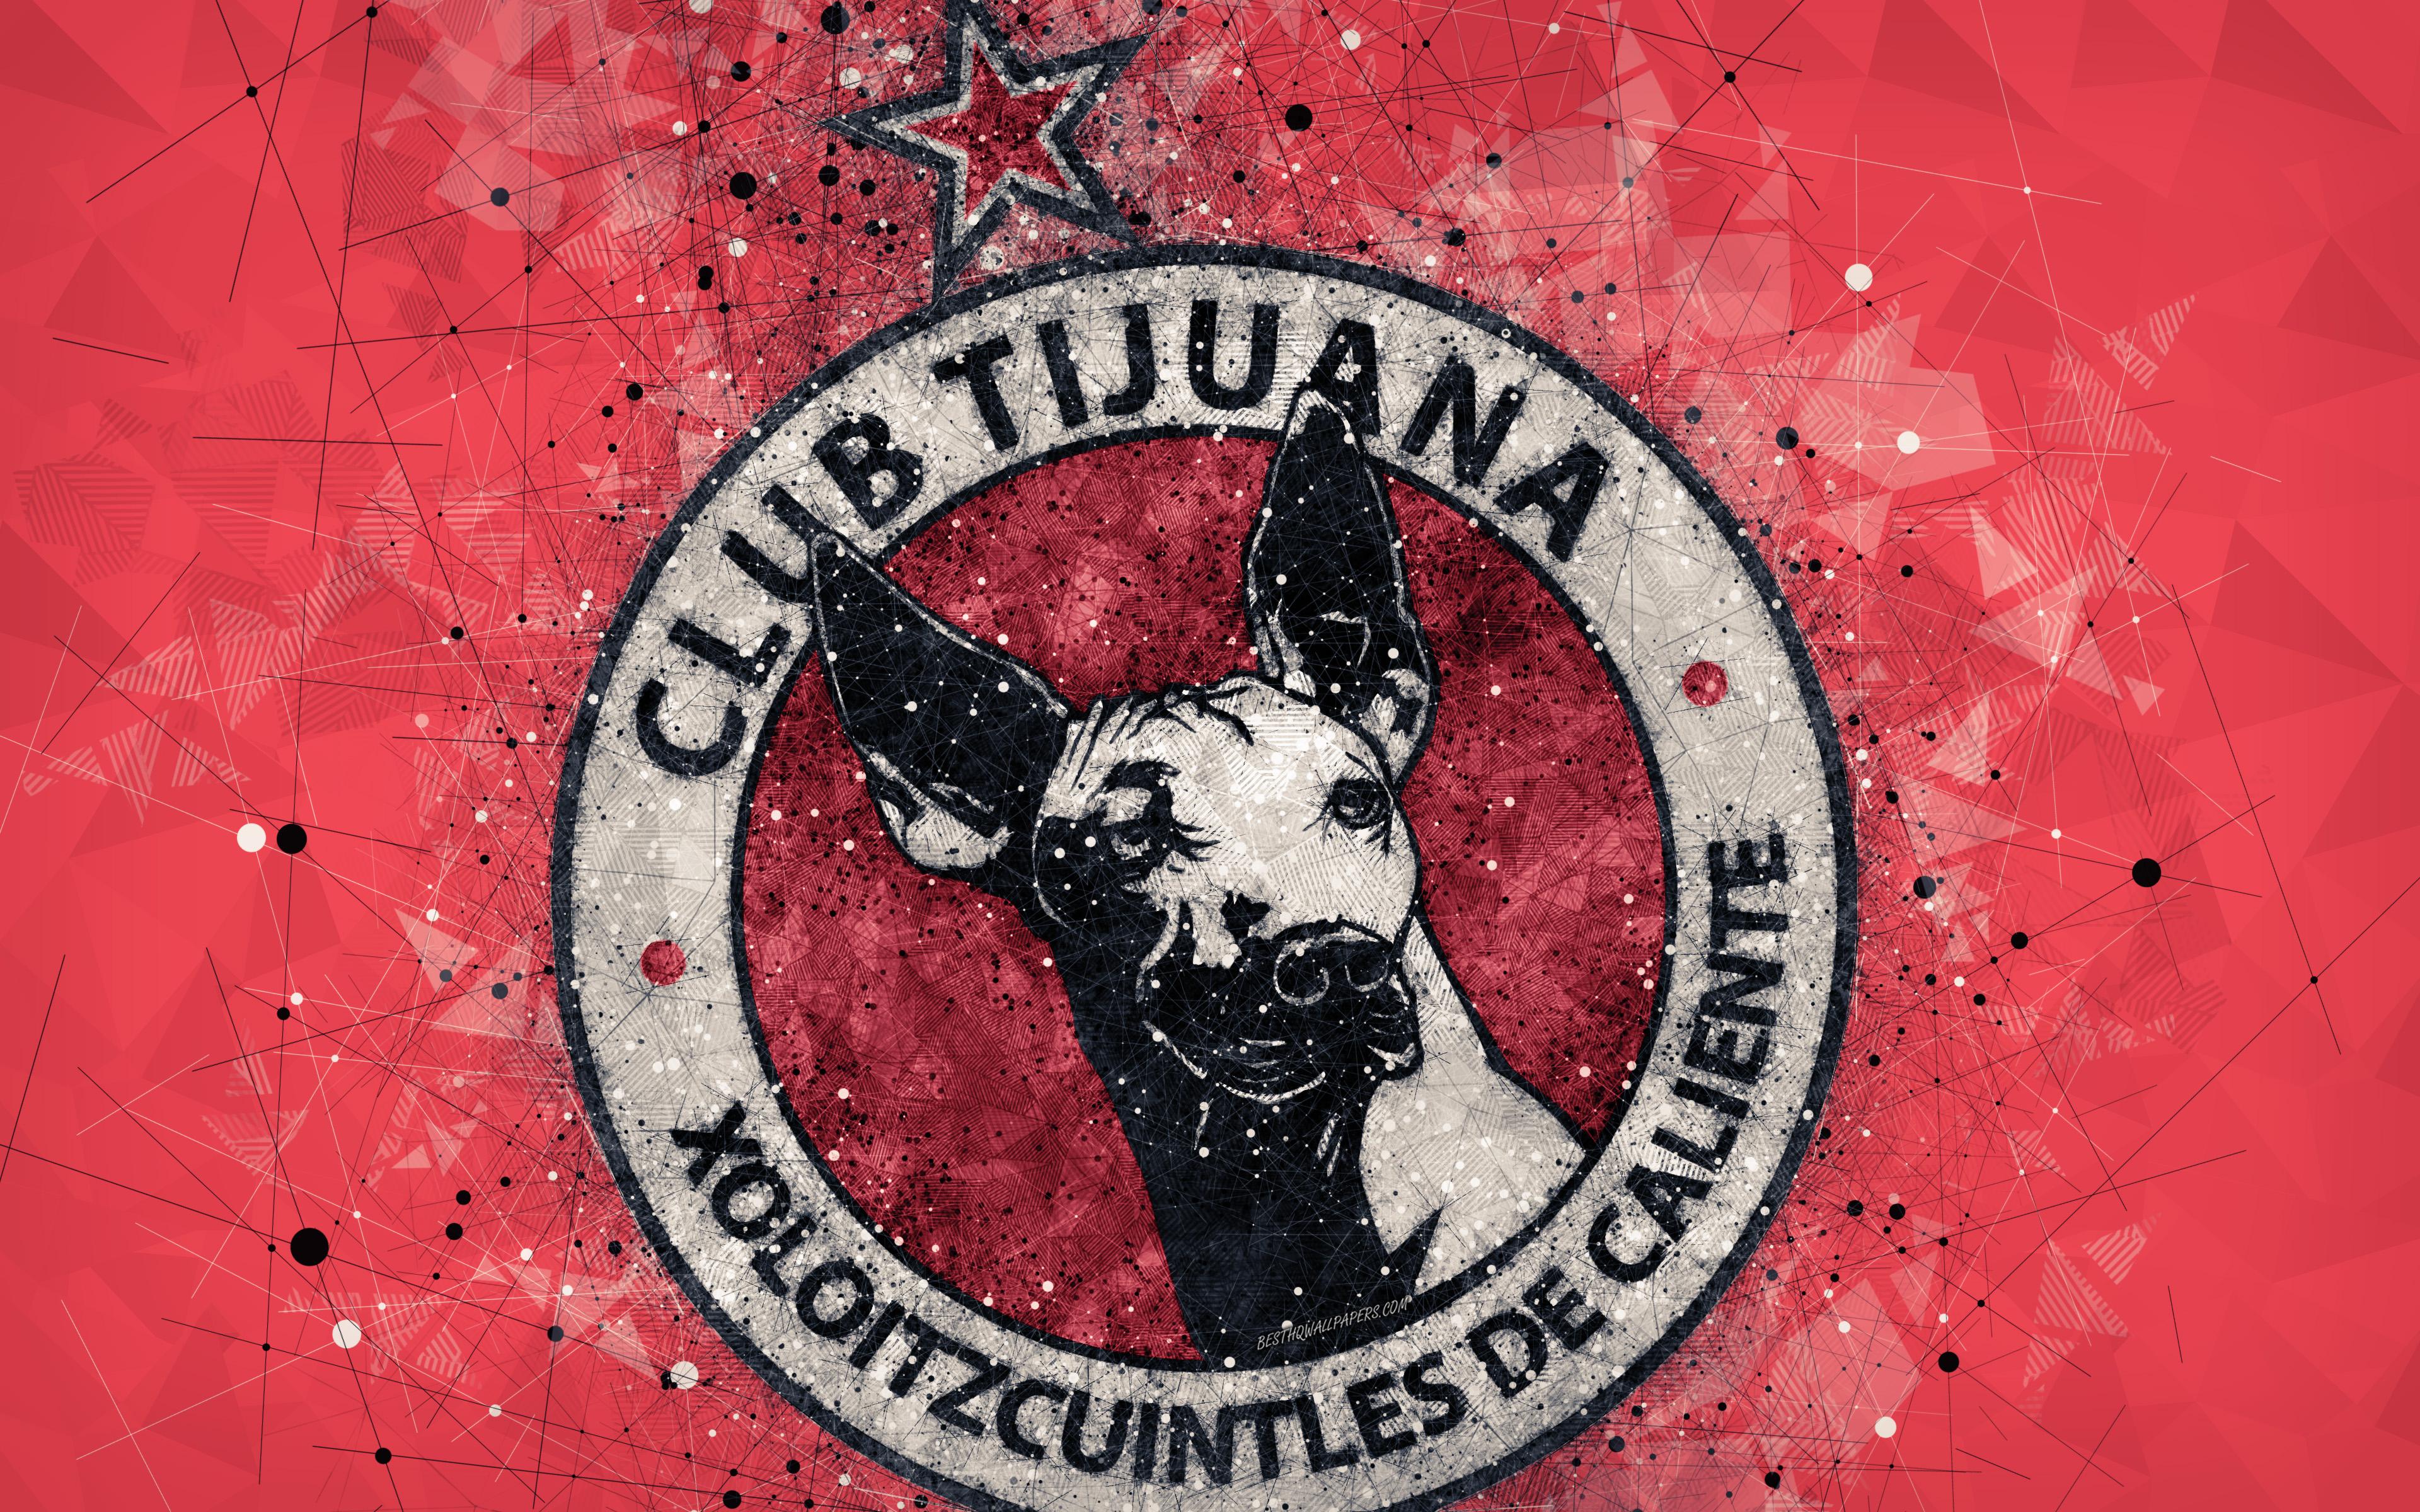 Download wallpaper Club Tijuana, 4k, geometric art, logo, Mexican